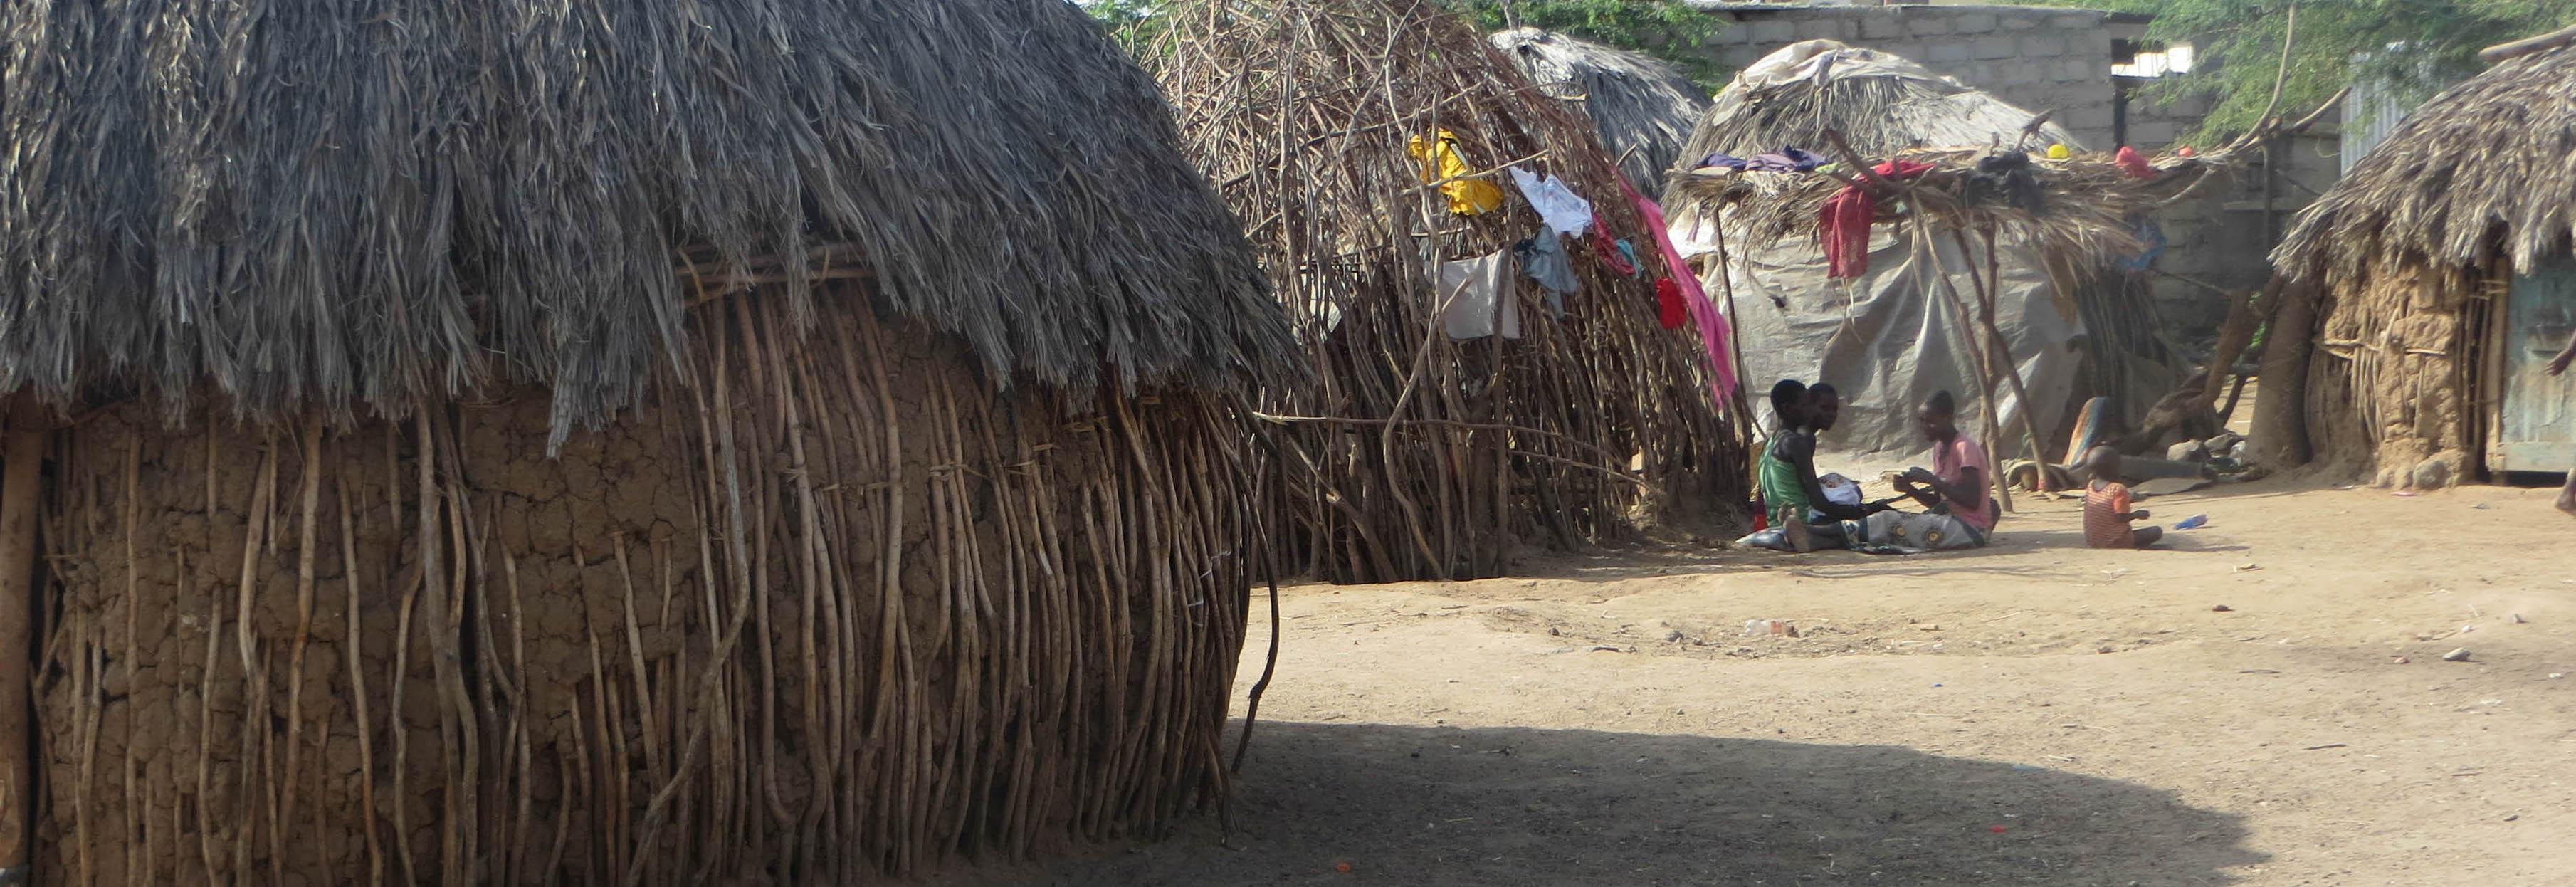 Homes on the outskirt of Lodwar, Kenya. Credit: Marina Korzenevica